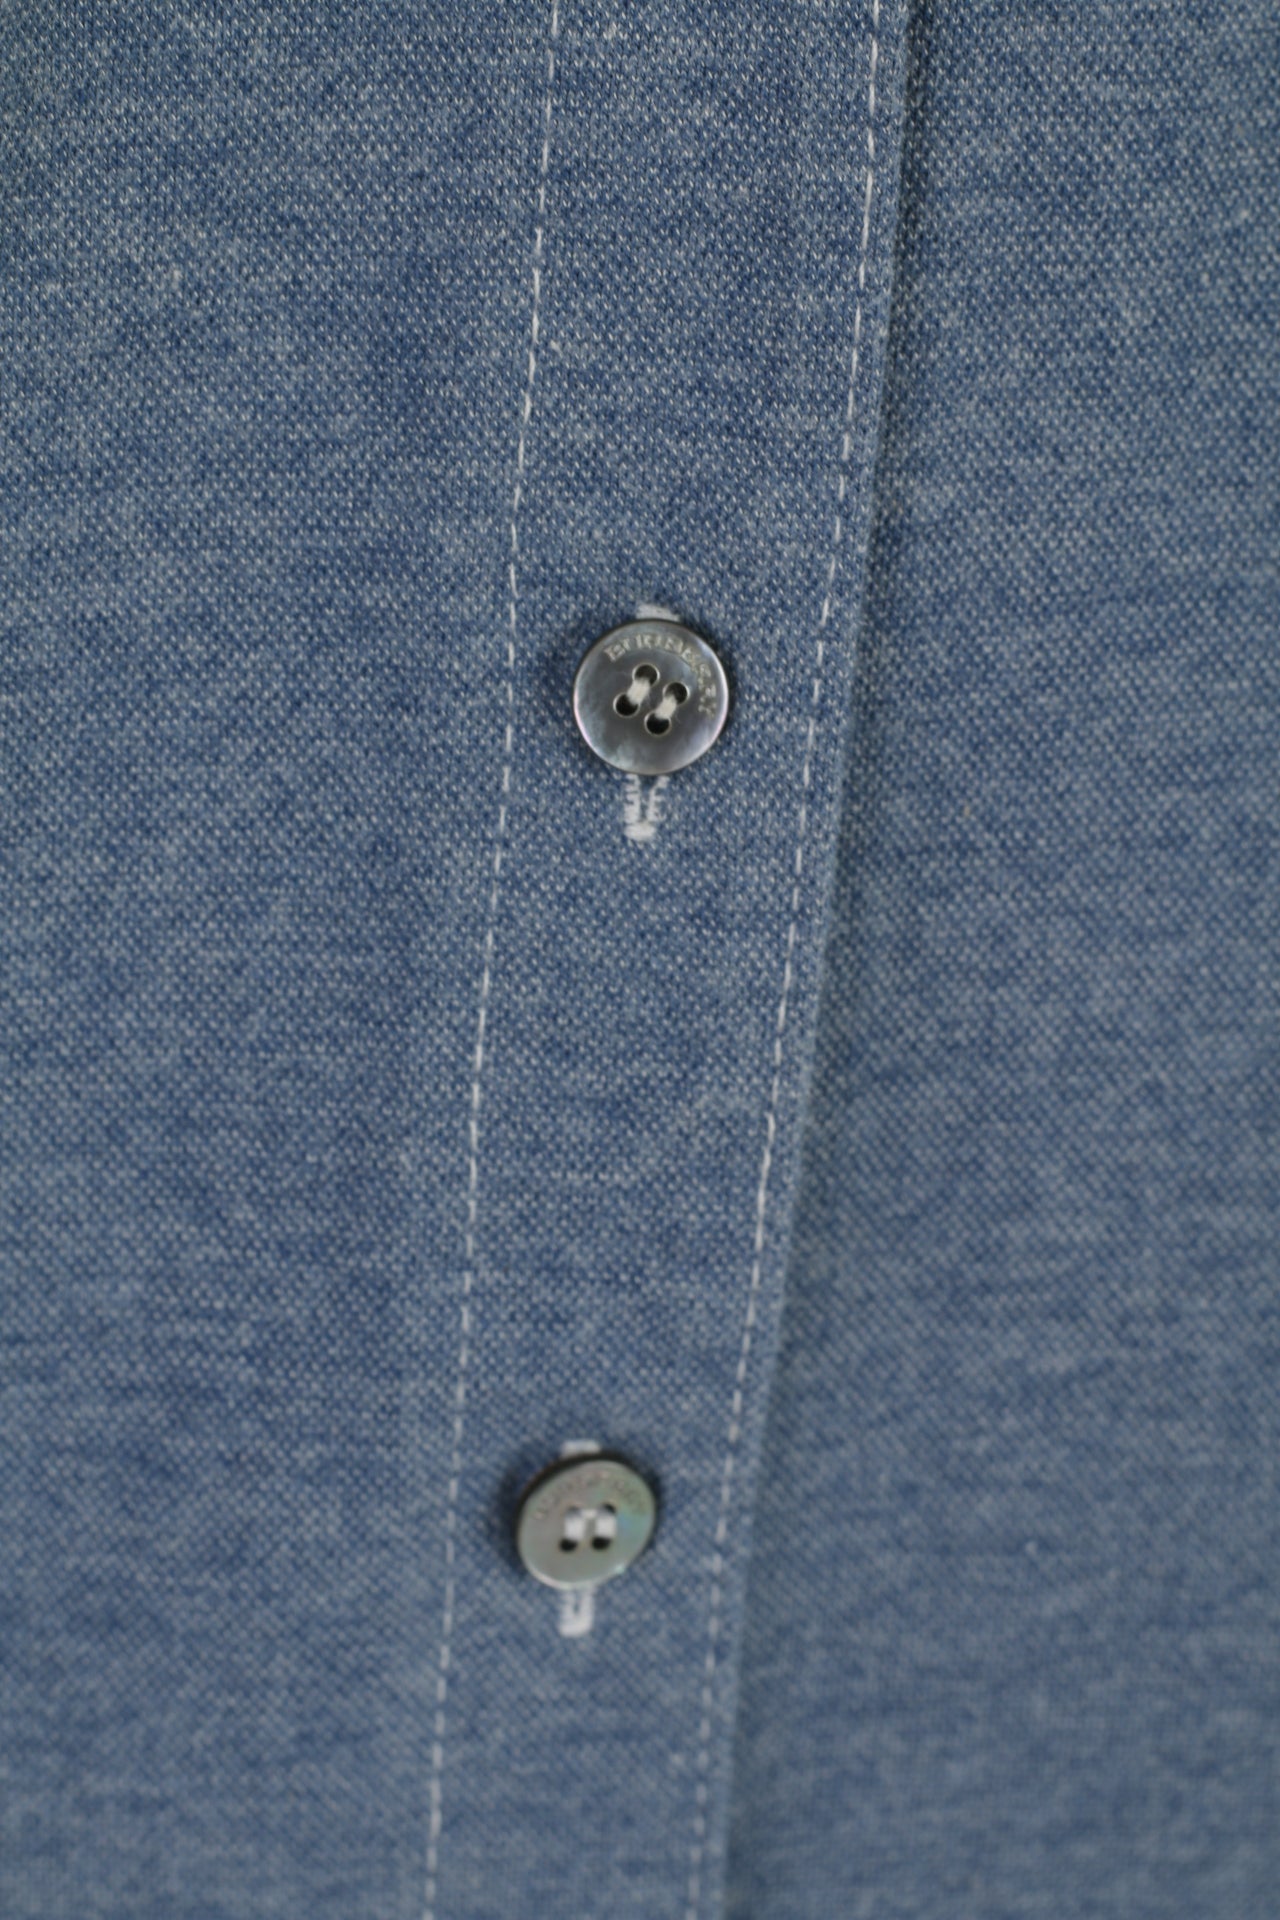 Burberry London Womens 44 S Shirt Sleeveless Blue Cotton Top Vest